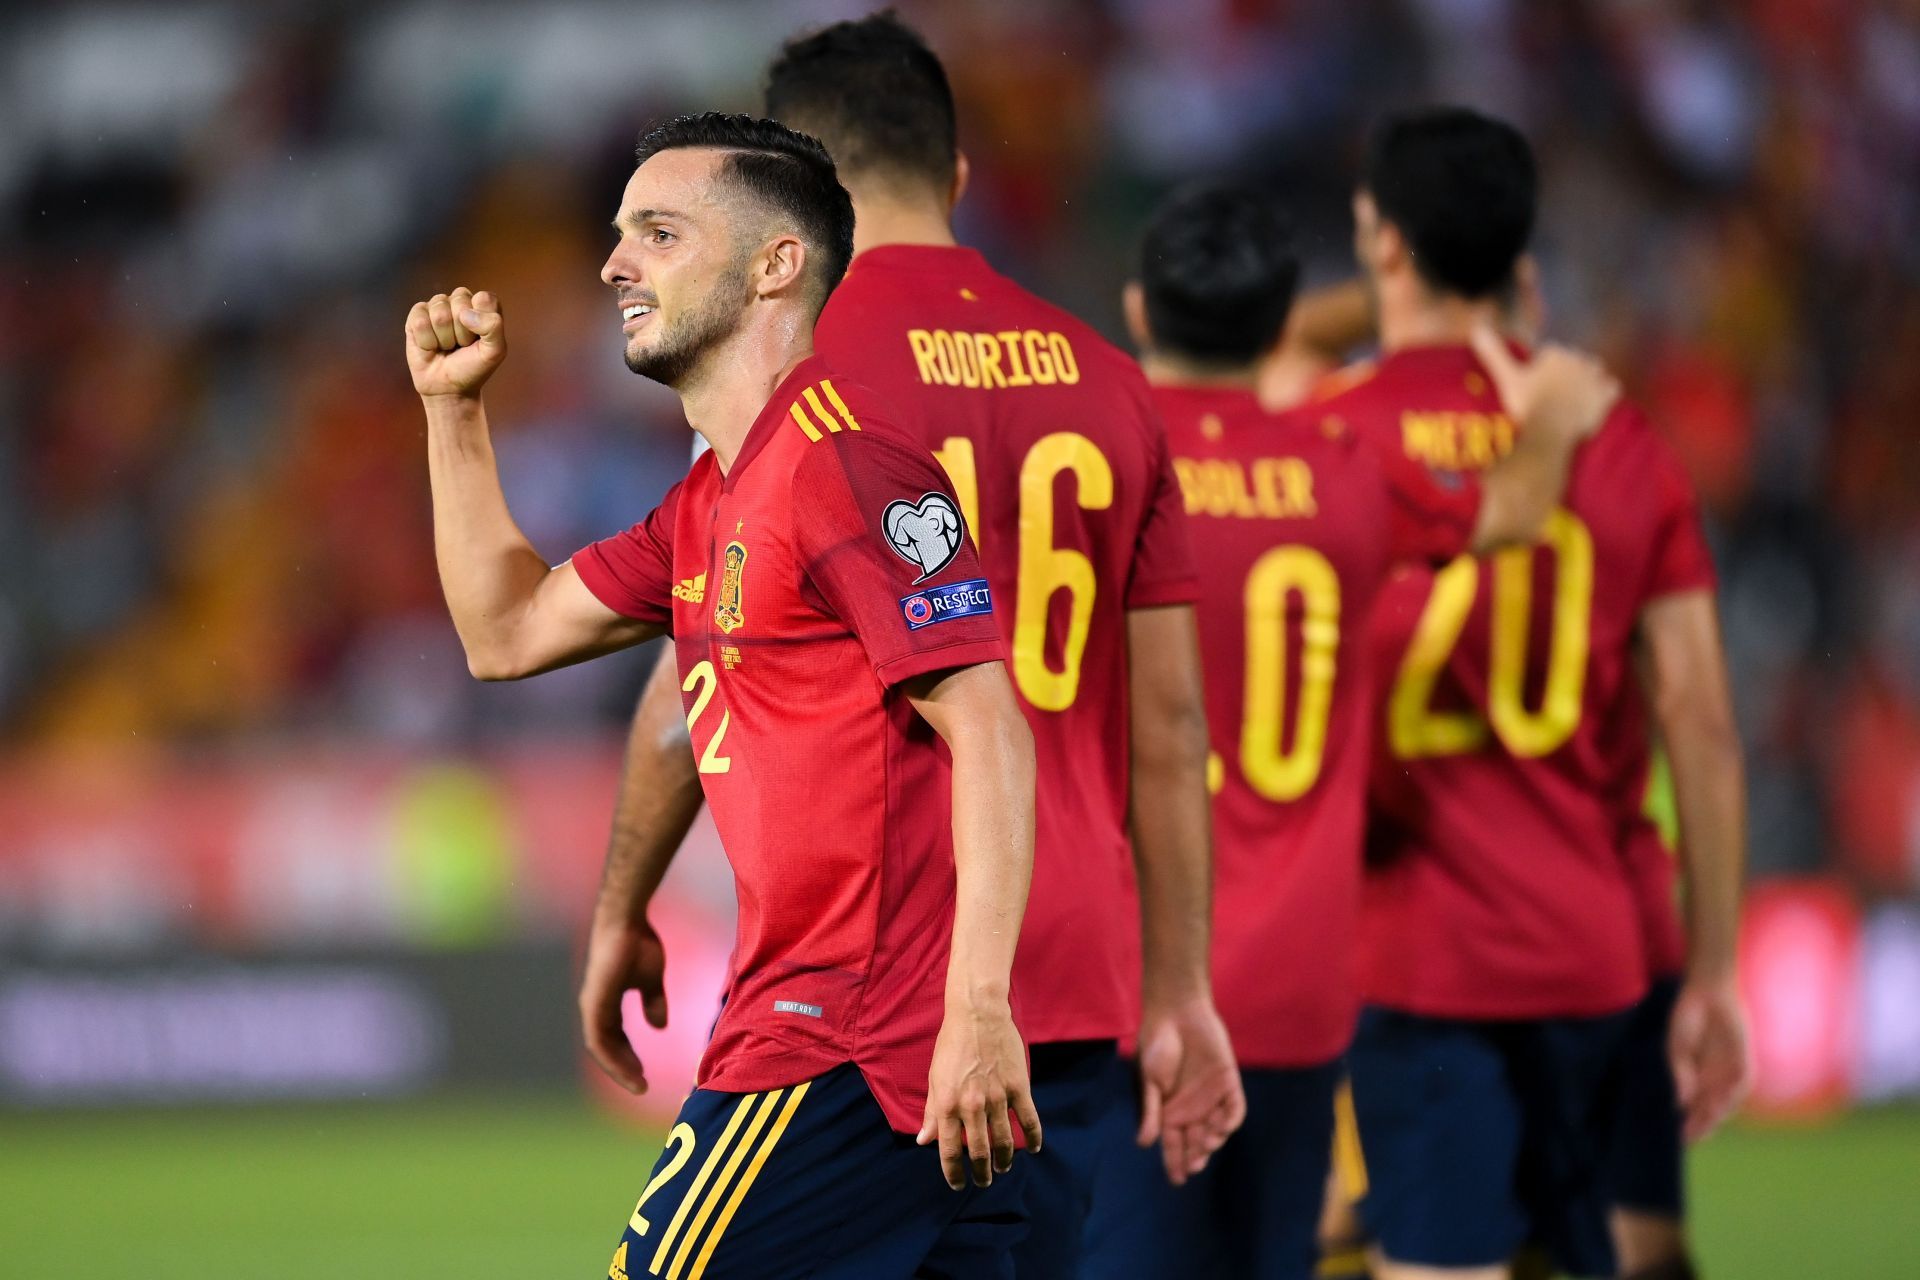 Greece vs Spain: Pablo Sarabia celebrates after scoring.